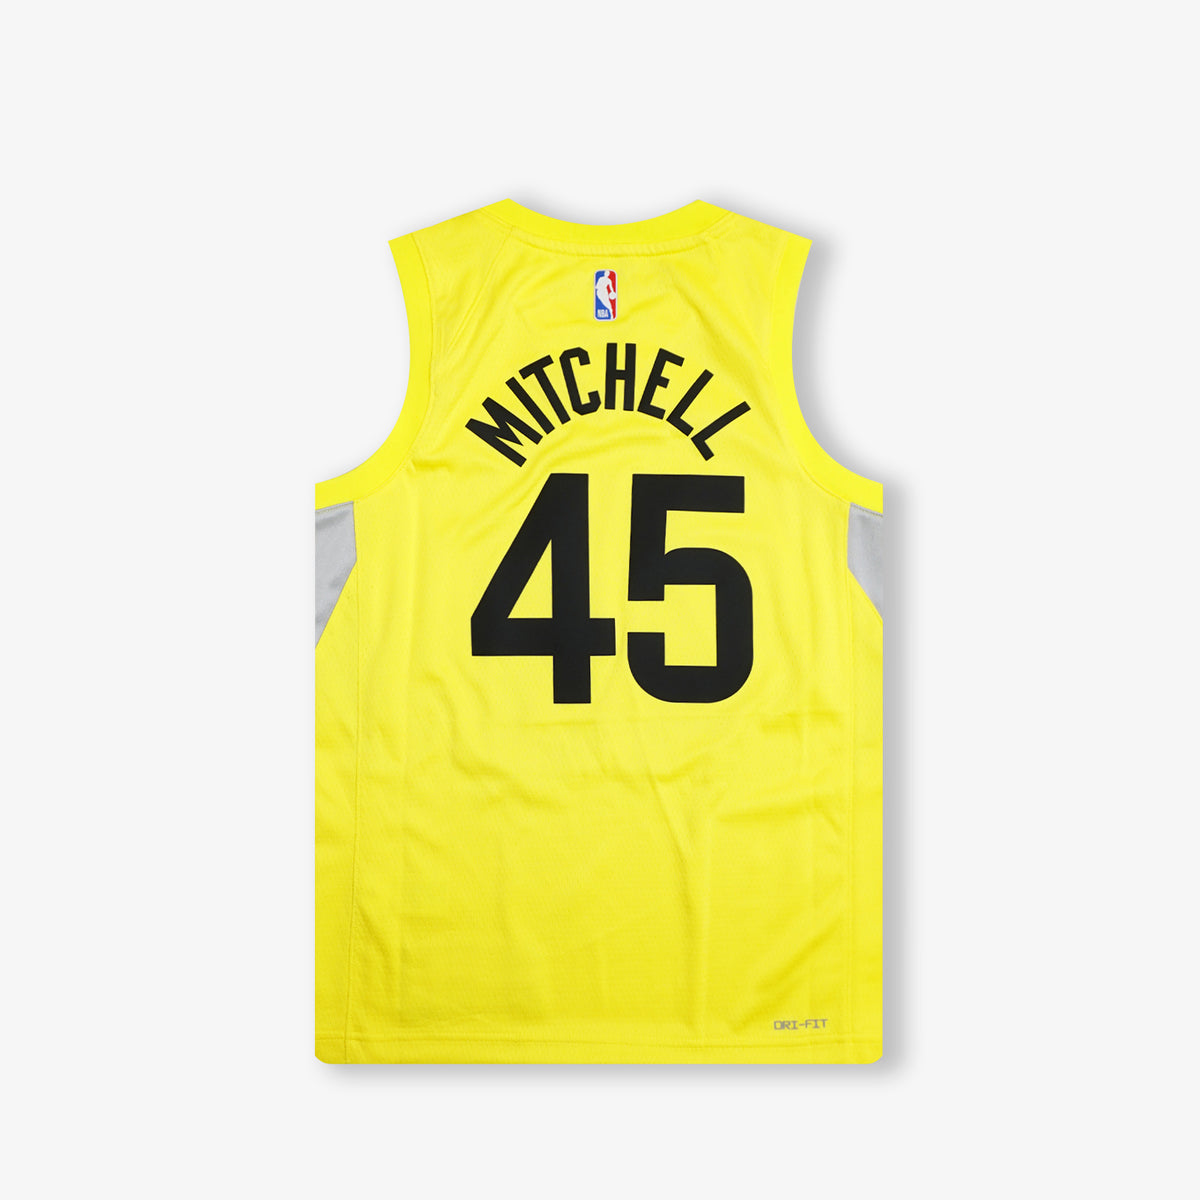 Utah Jazz: The last 5 NBA jerseys I want to see on Donovan Mitchell